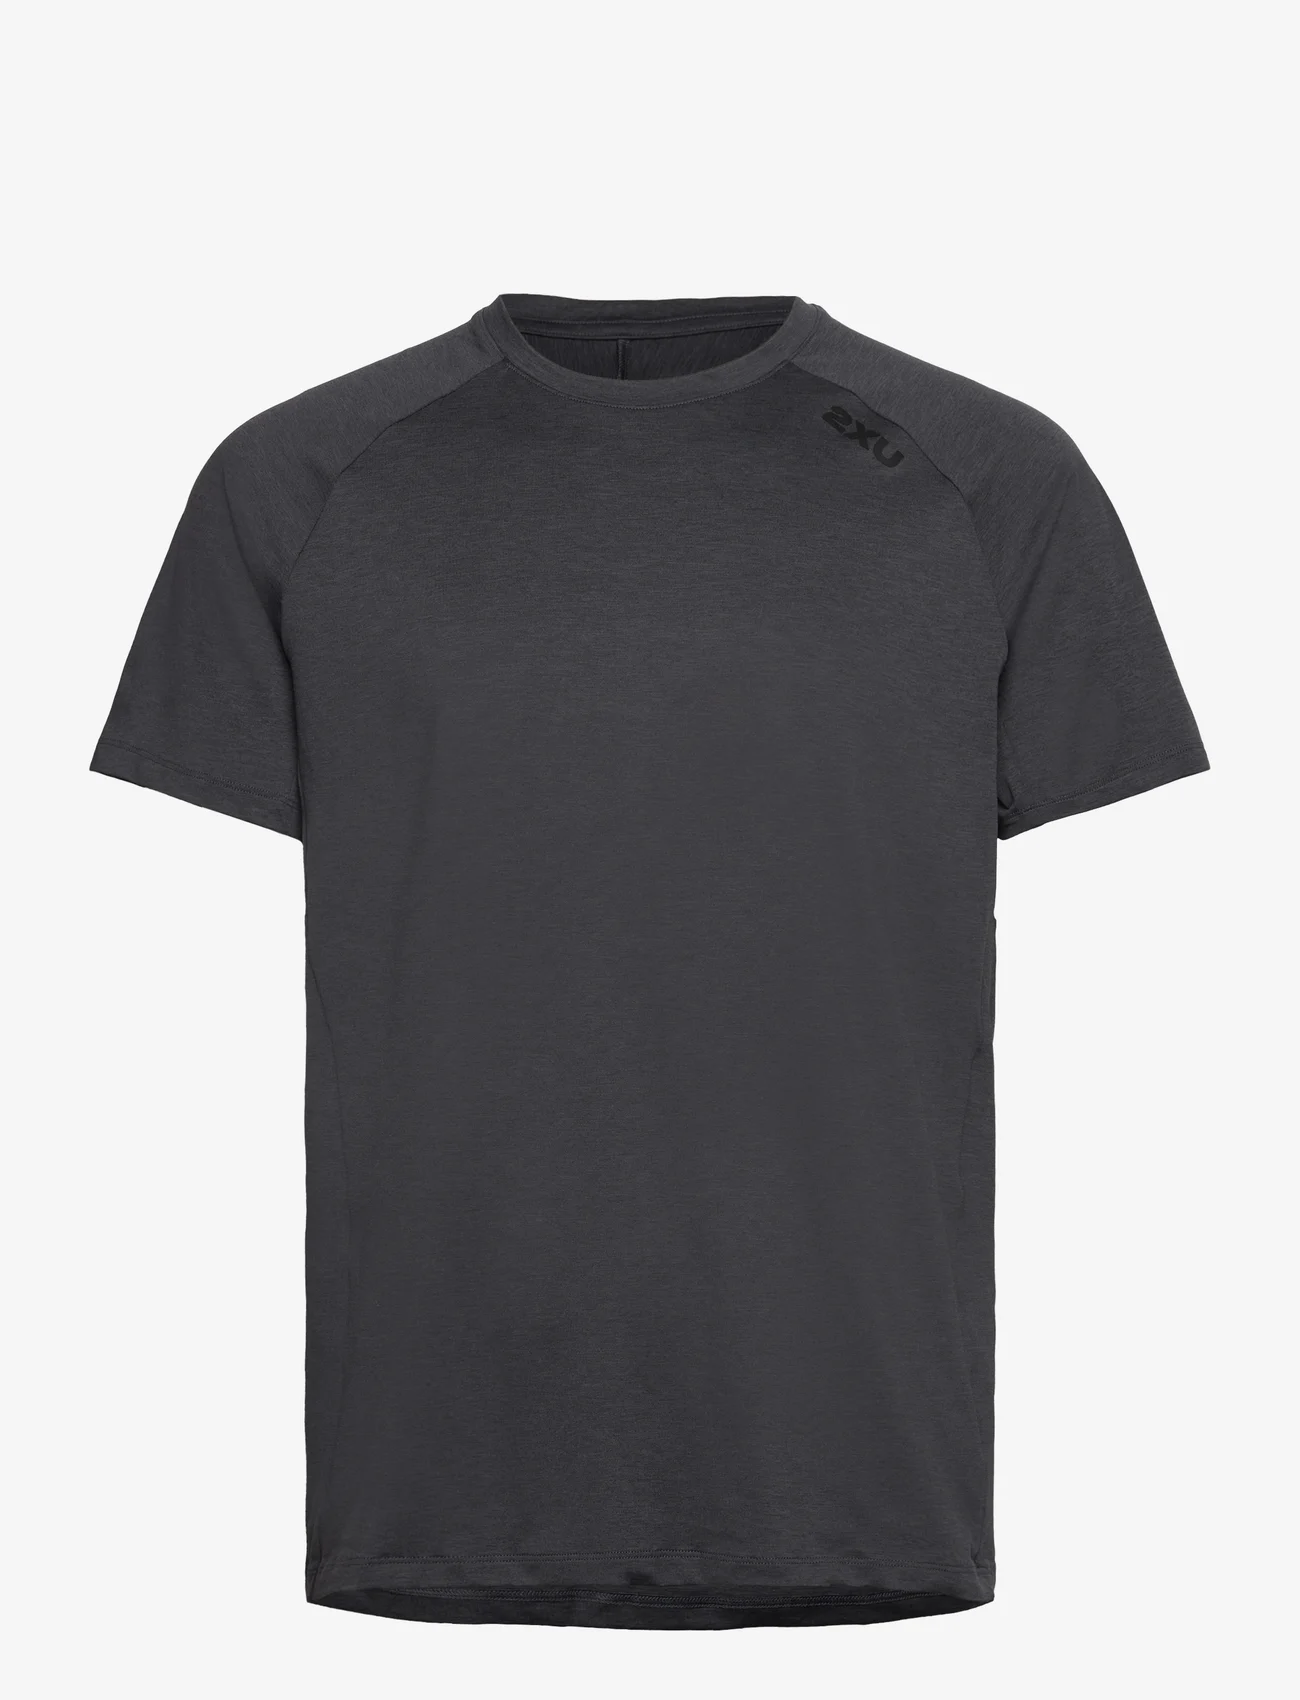 2XU - MOTION TEE - short-sleeved t-shirts - india ink/black - 0